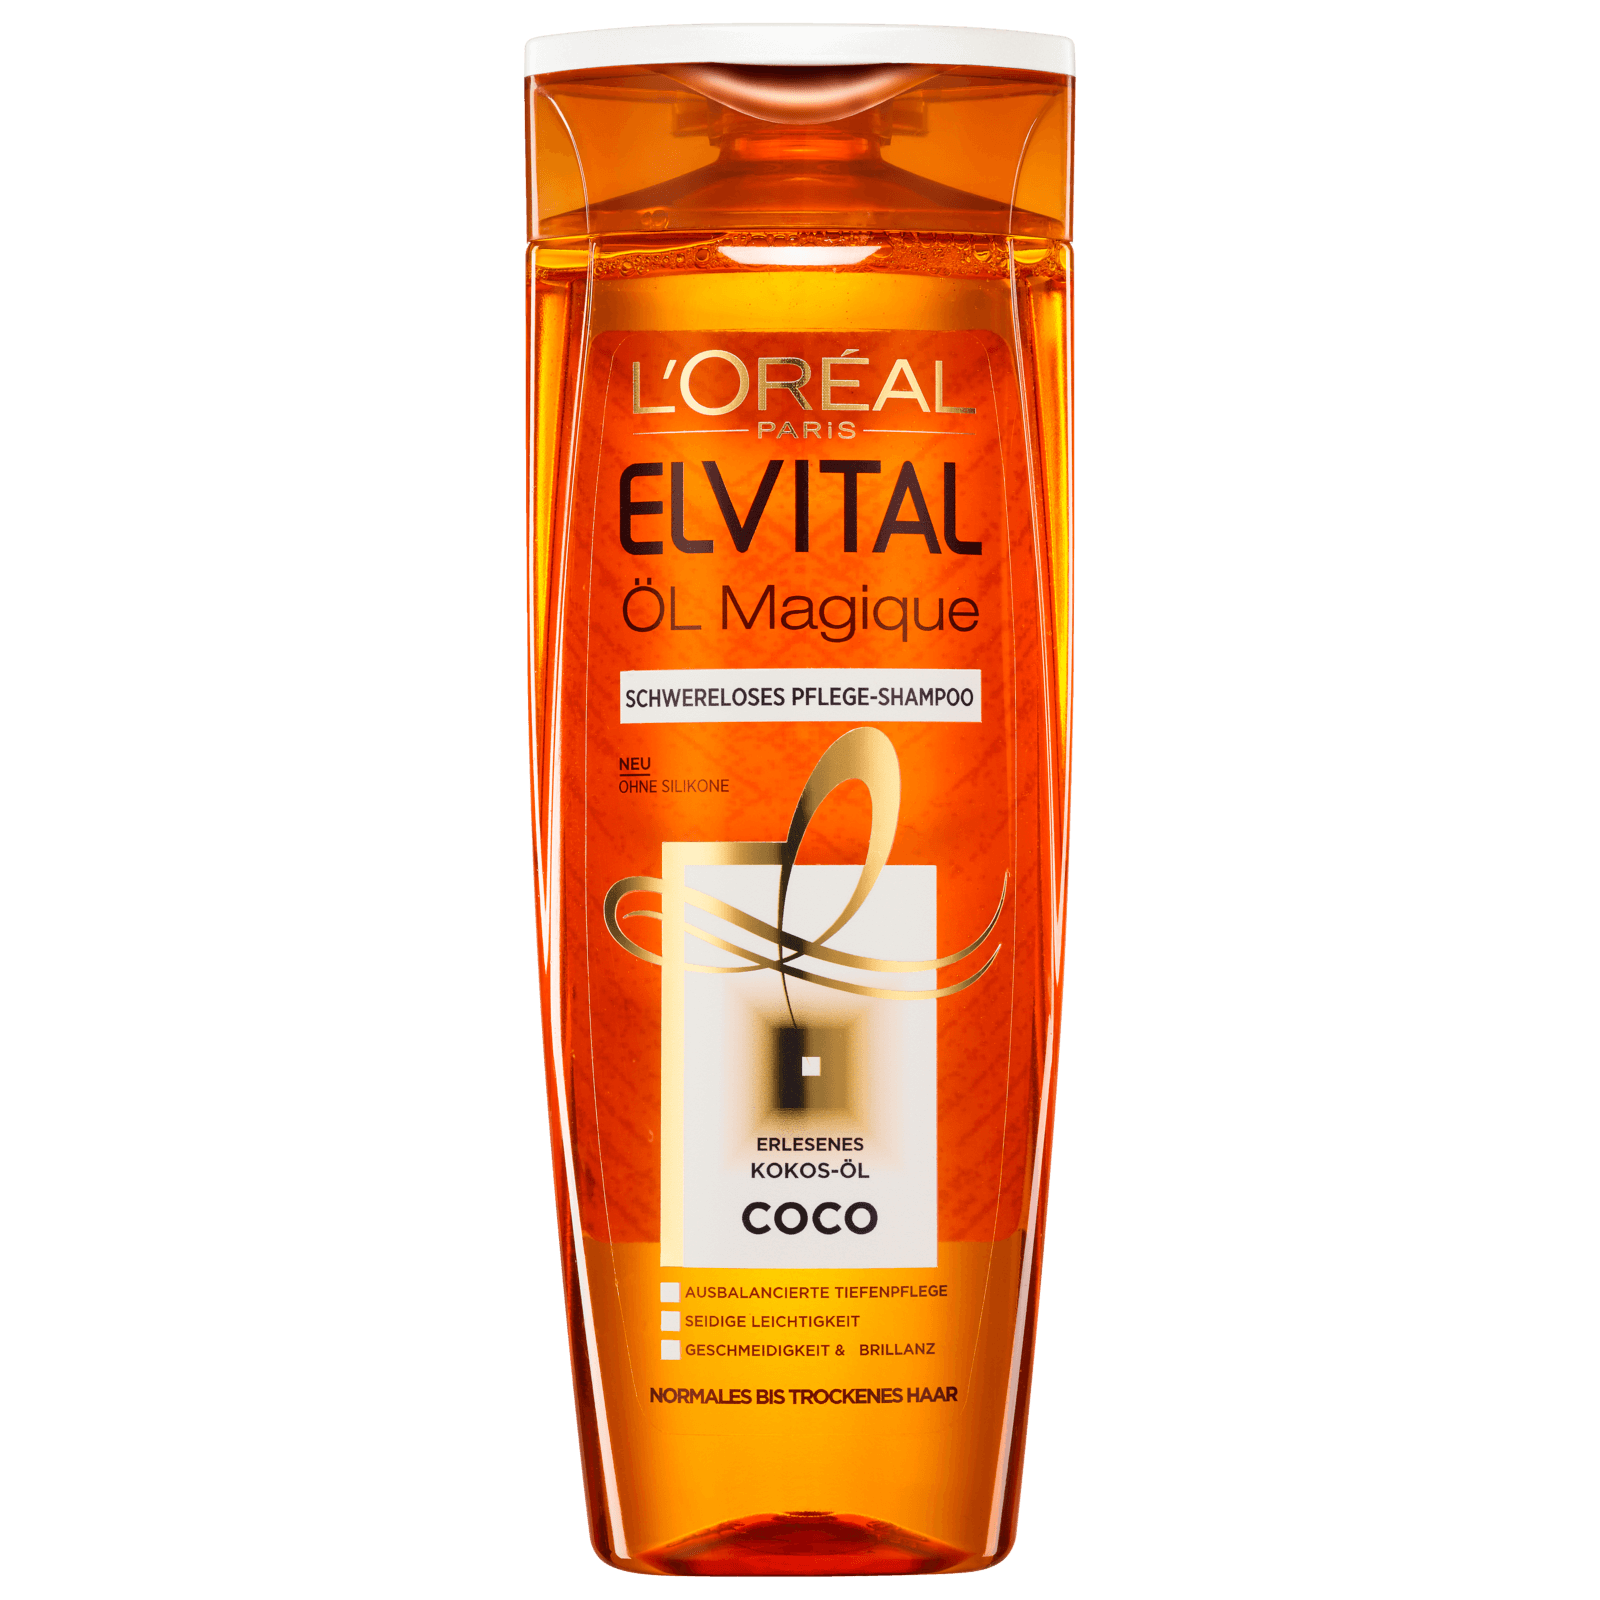 tweet etage Repressalier L'Oréal Paris Elvital Shampoo Öl Magique Coco 300ml bei REWE online  bestellen!